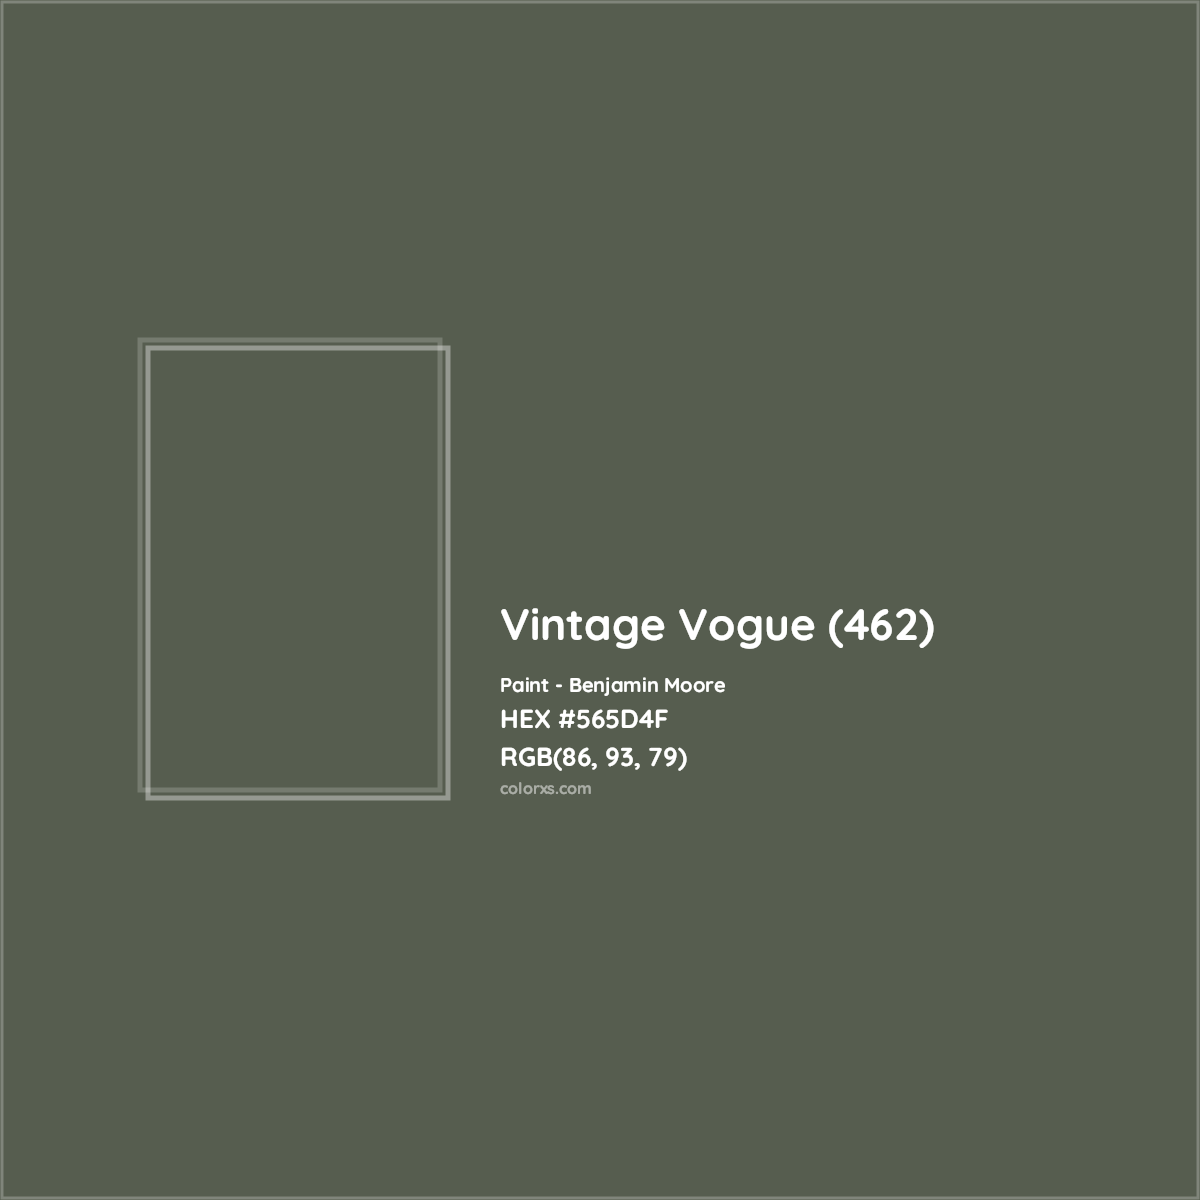 HEX #565D4F Vintage Vogue (462) Paint Benjamin Moore - Color Code